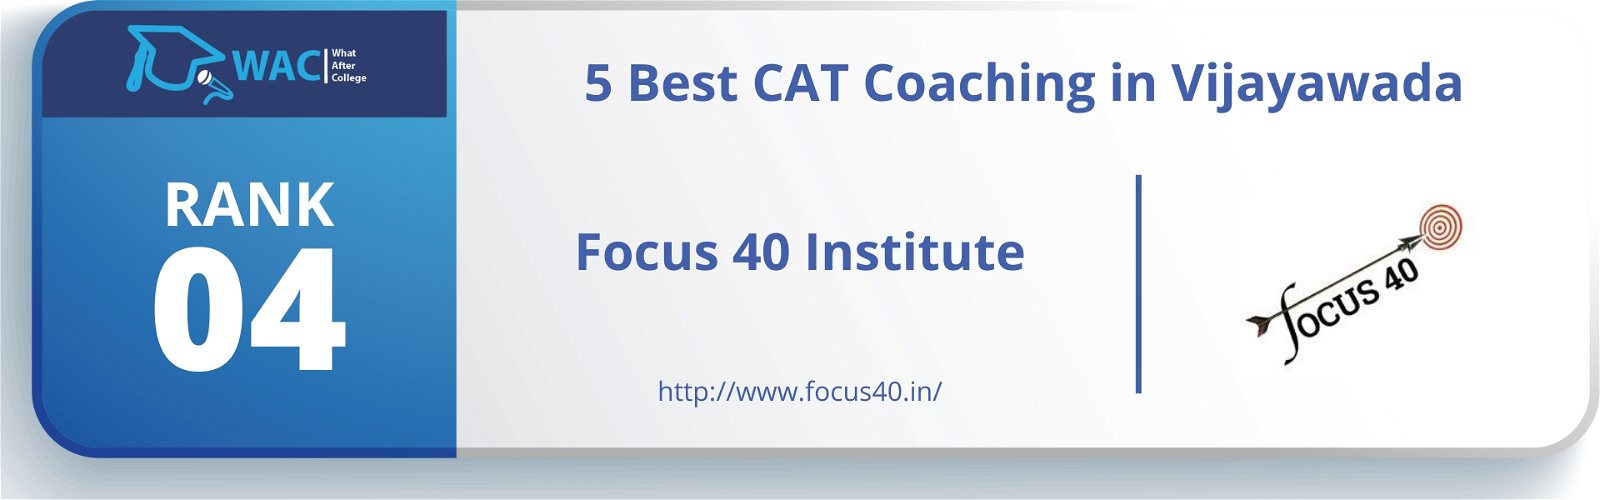 cat coaching centers in vijayawada